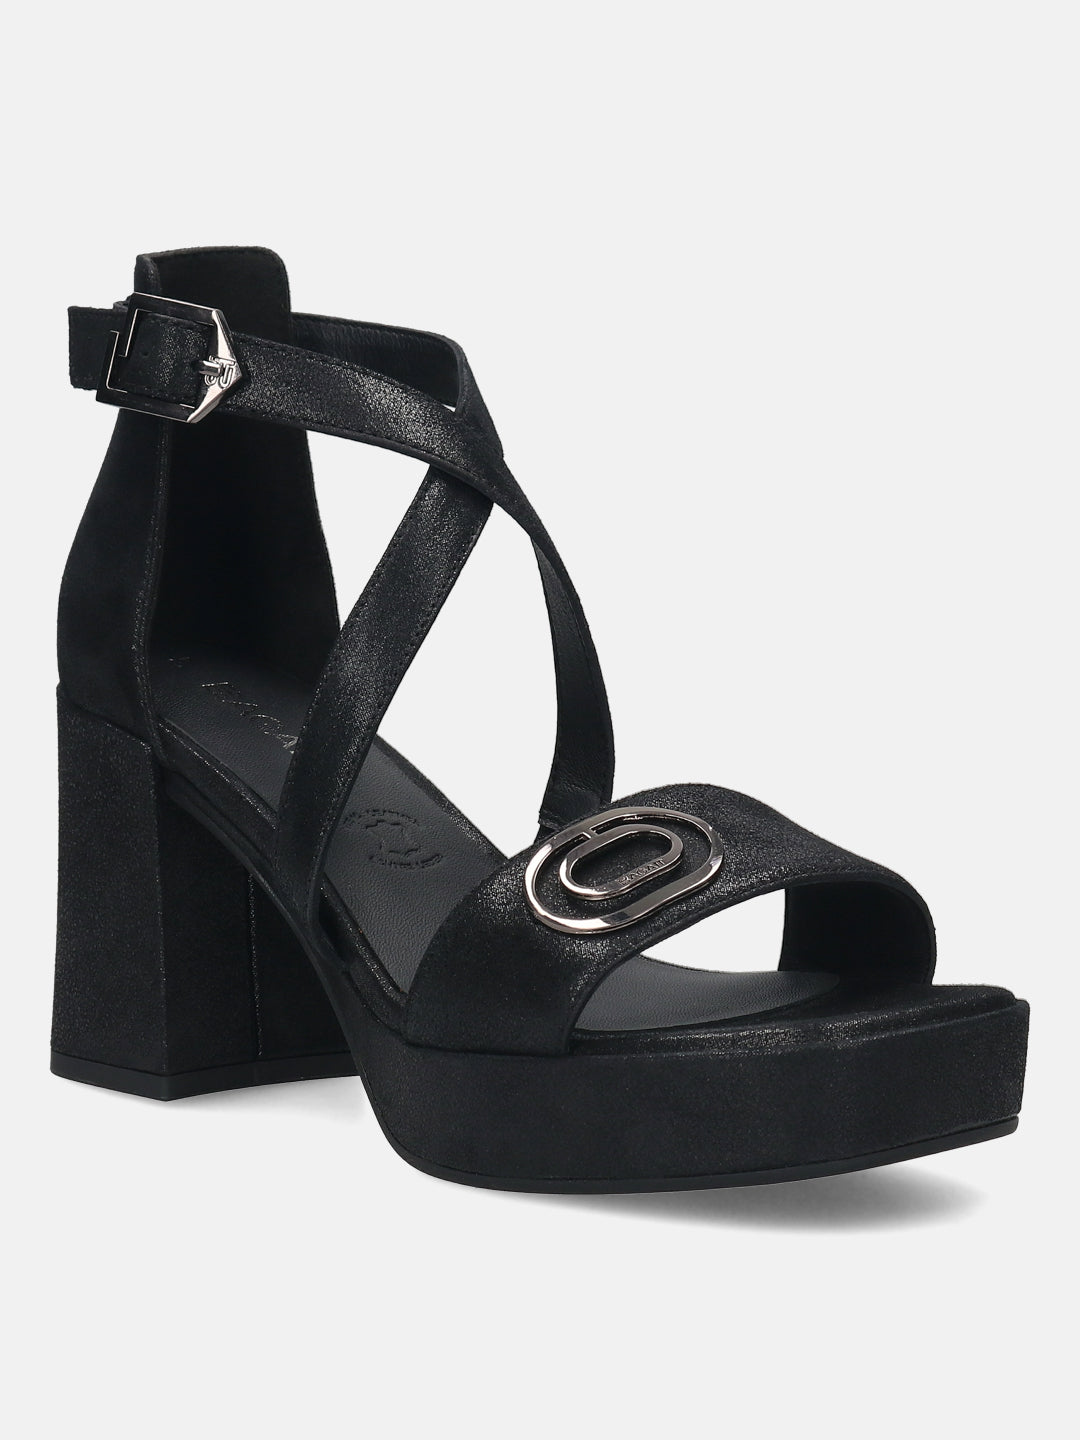 BAGATT Premium Leather Black Ankle Strap Heels